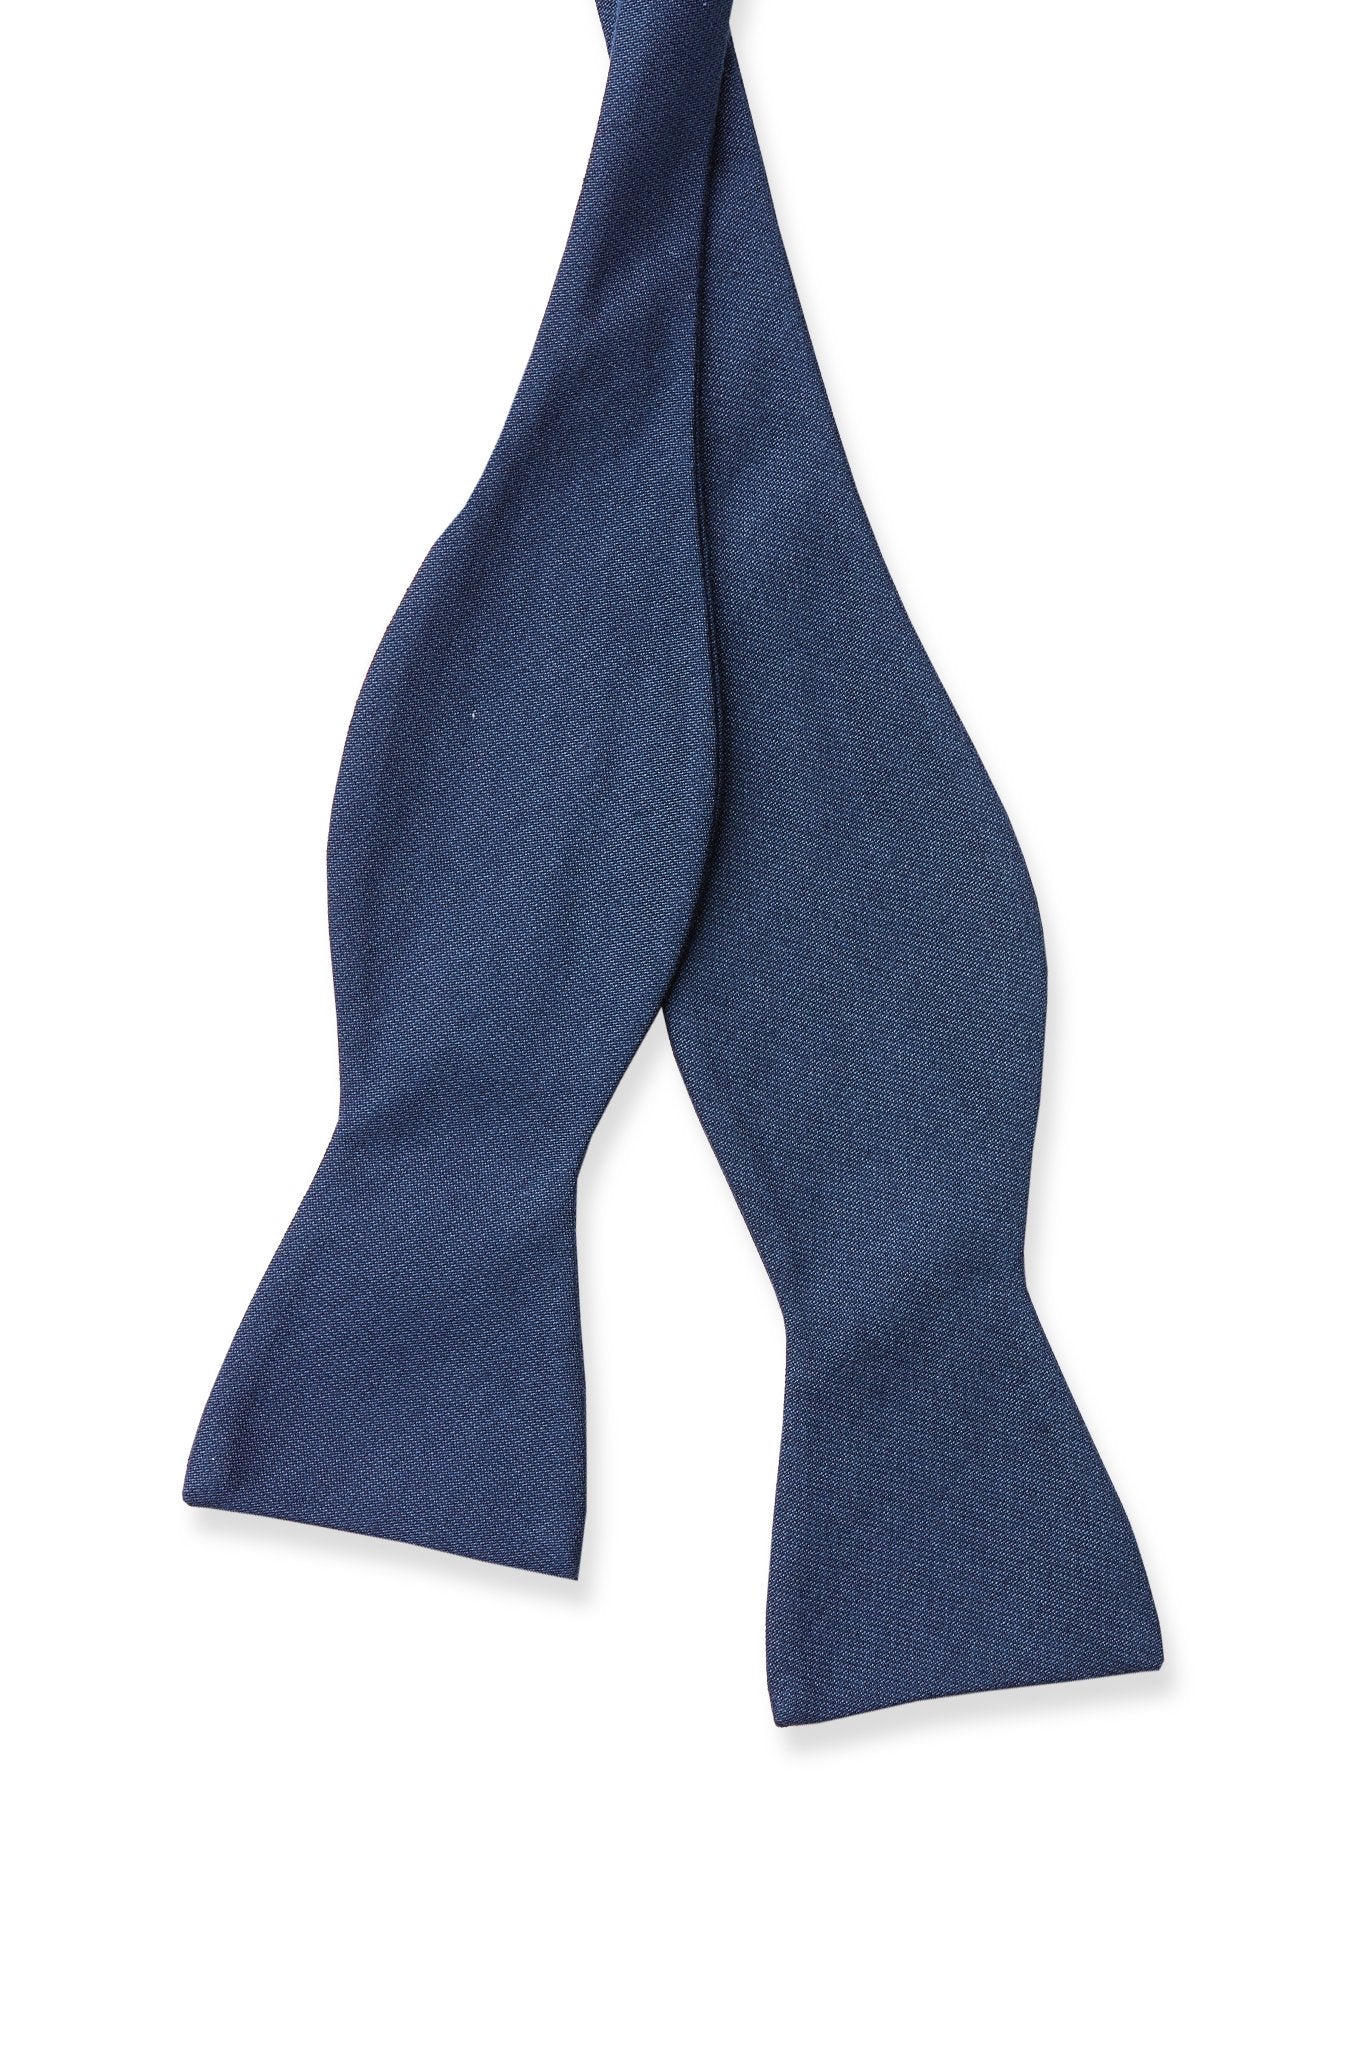 Daniel Bow Tie in slate blue by Birdy Grey, front view